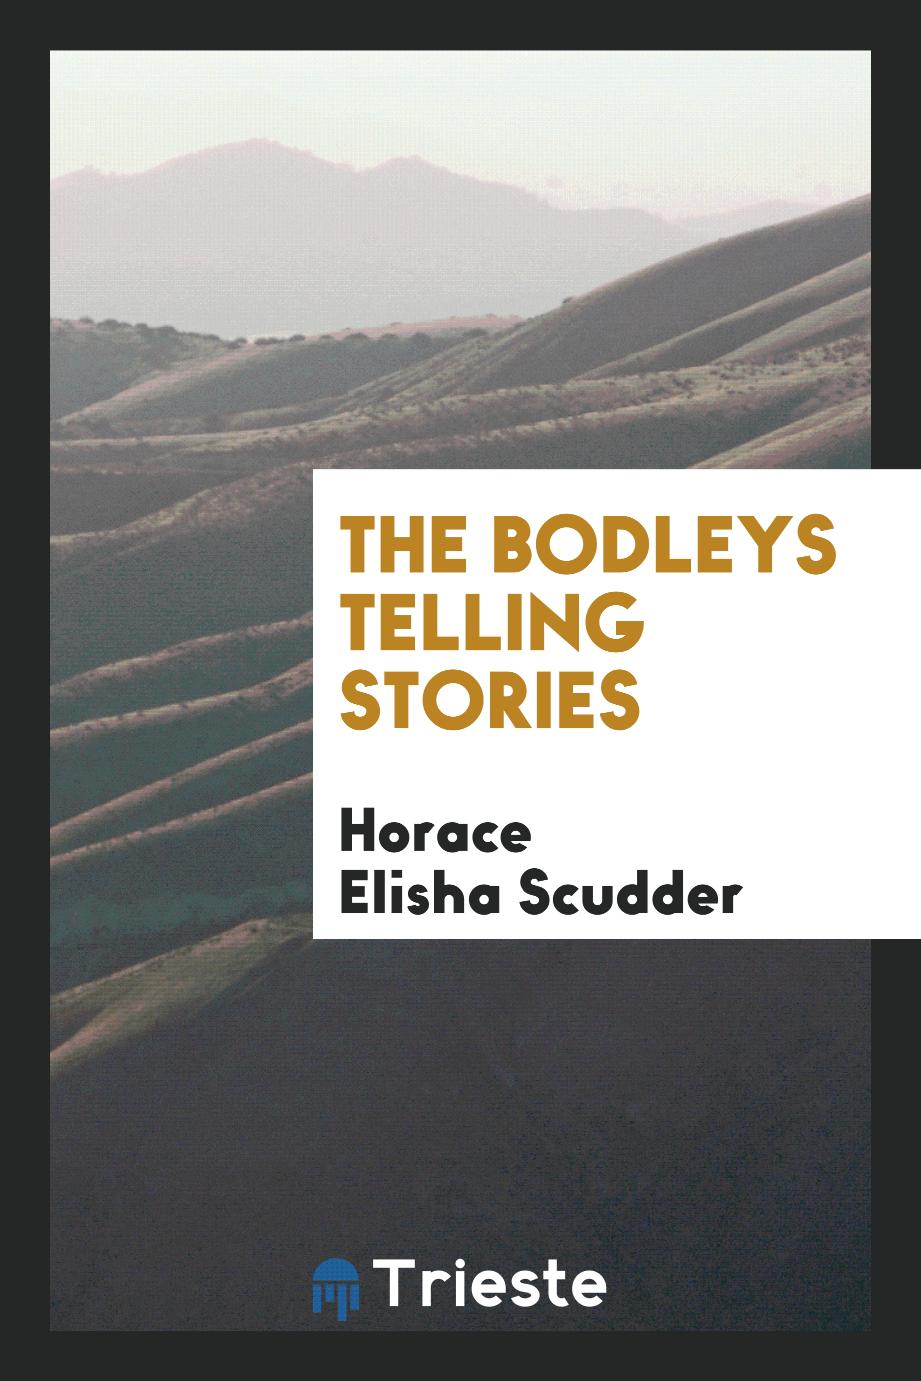 The Bodleys telling stories